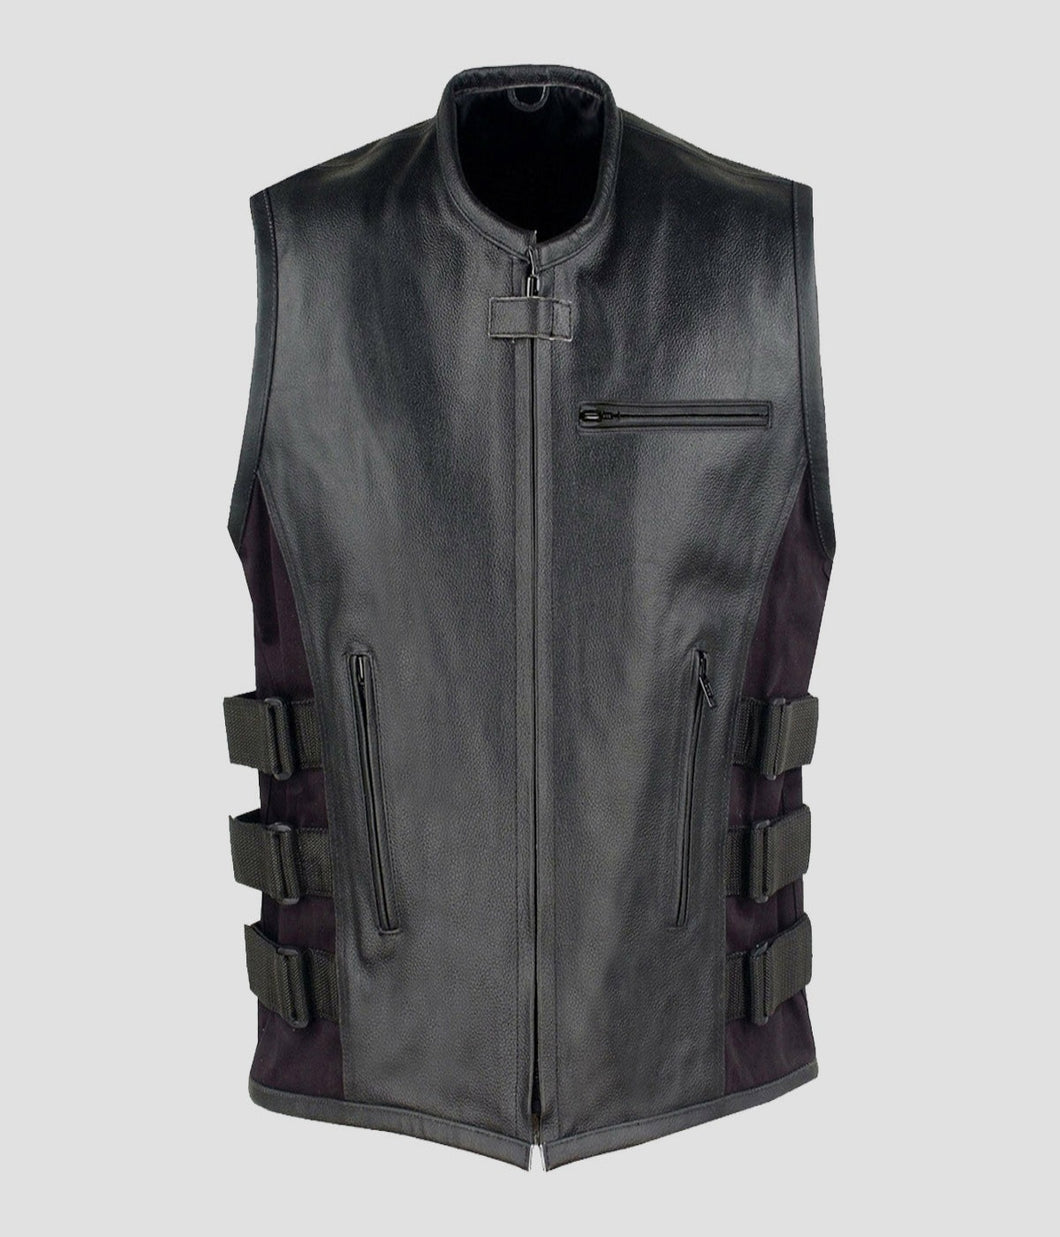 Mens Black Armor Motorcycle Adjustable Leather Vest